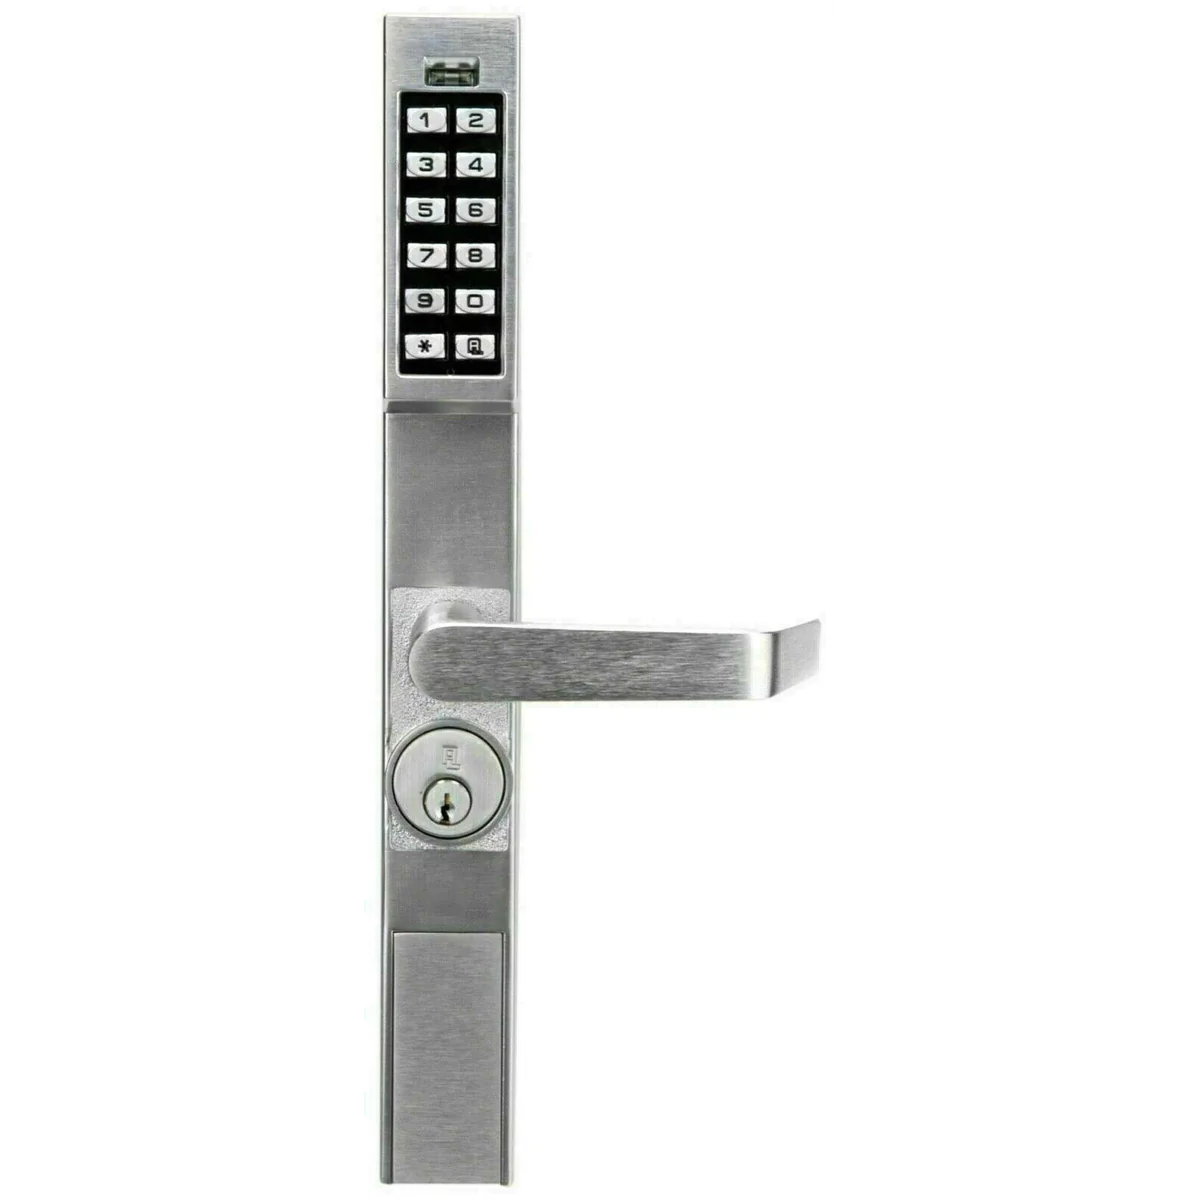 Keypad Locks for Storefront